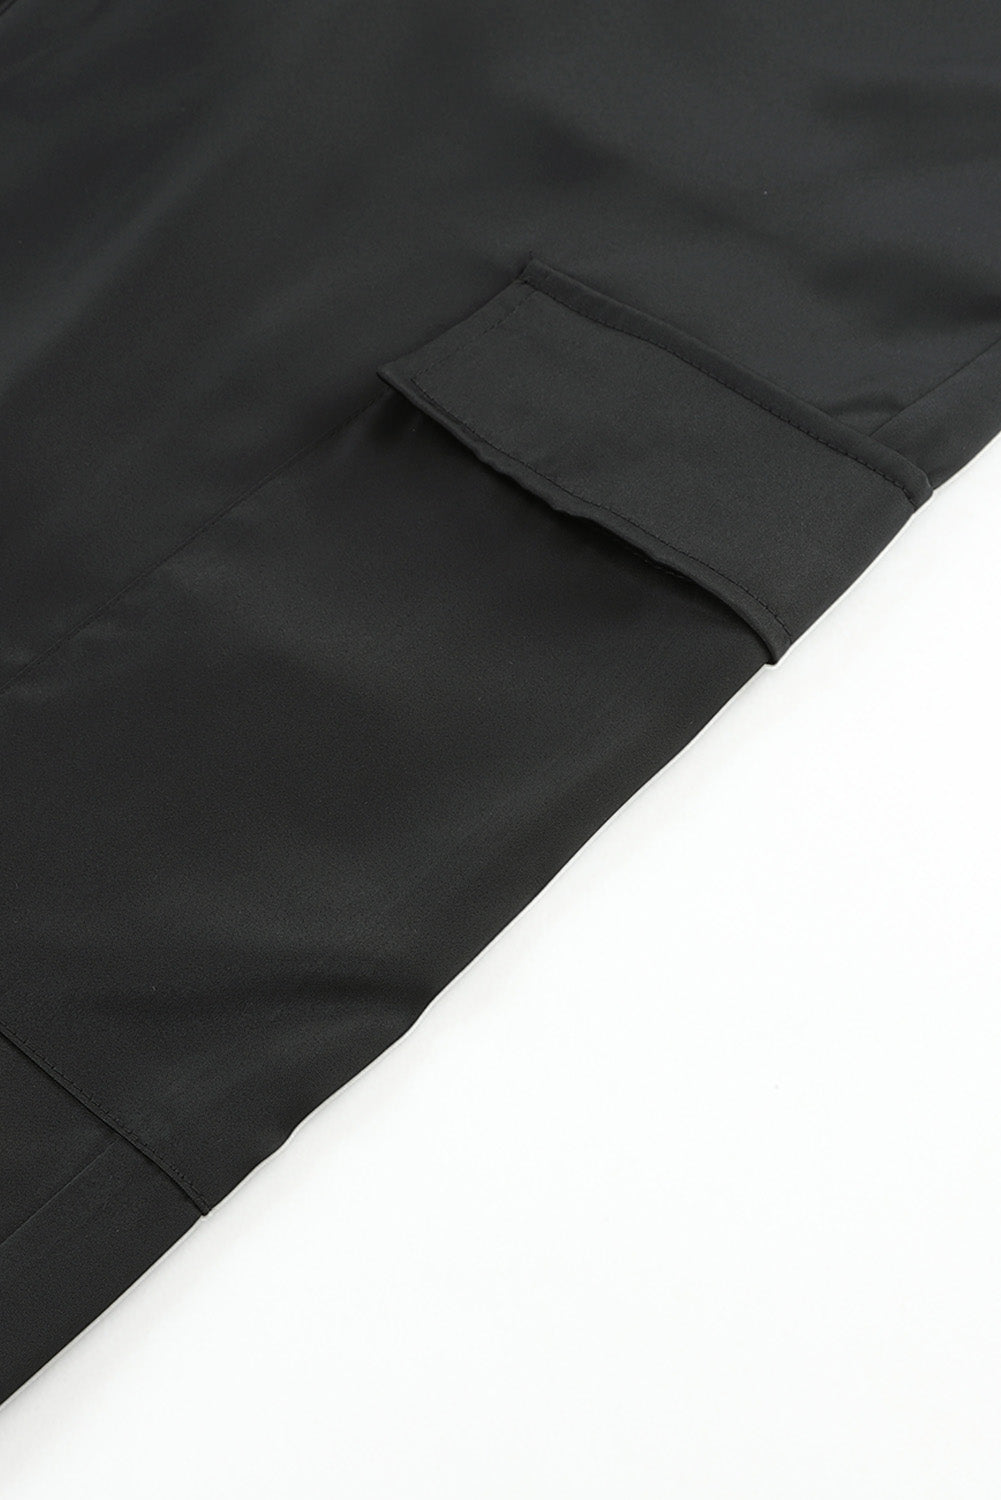 Black Satin Pocketed Drawstring Elastic Waist Pants MPJ0040